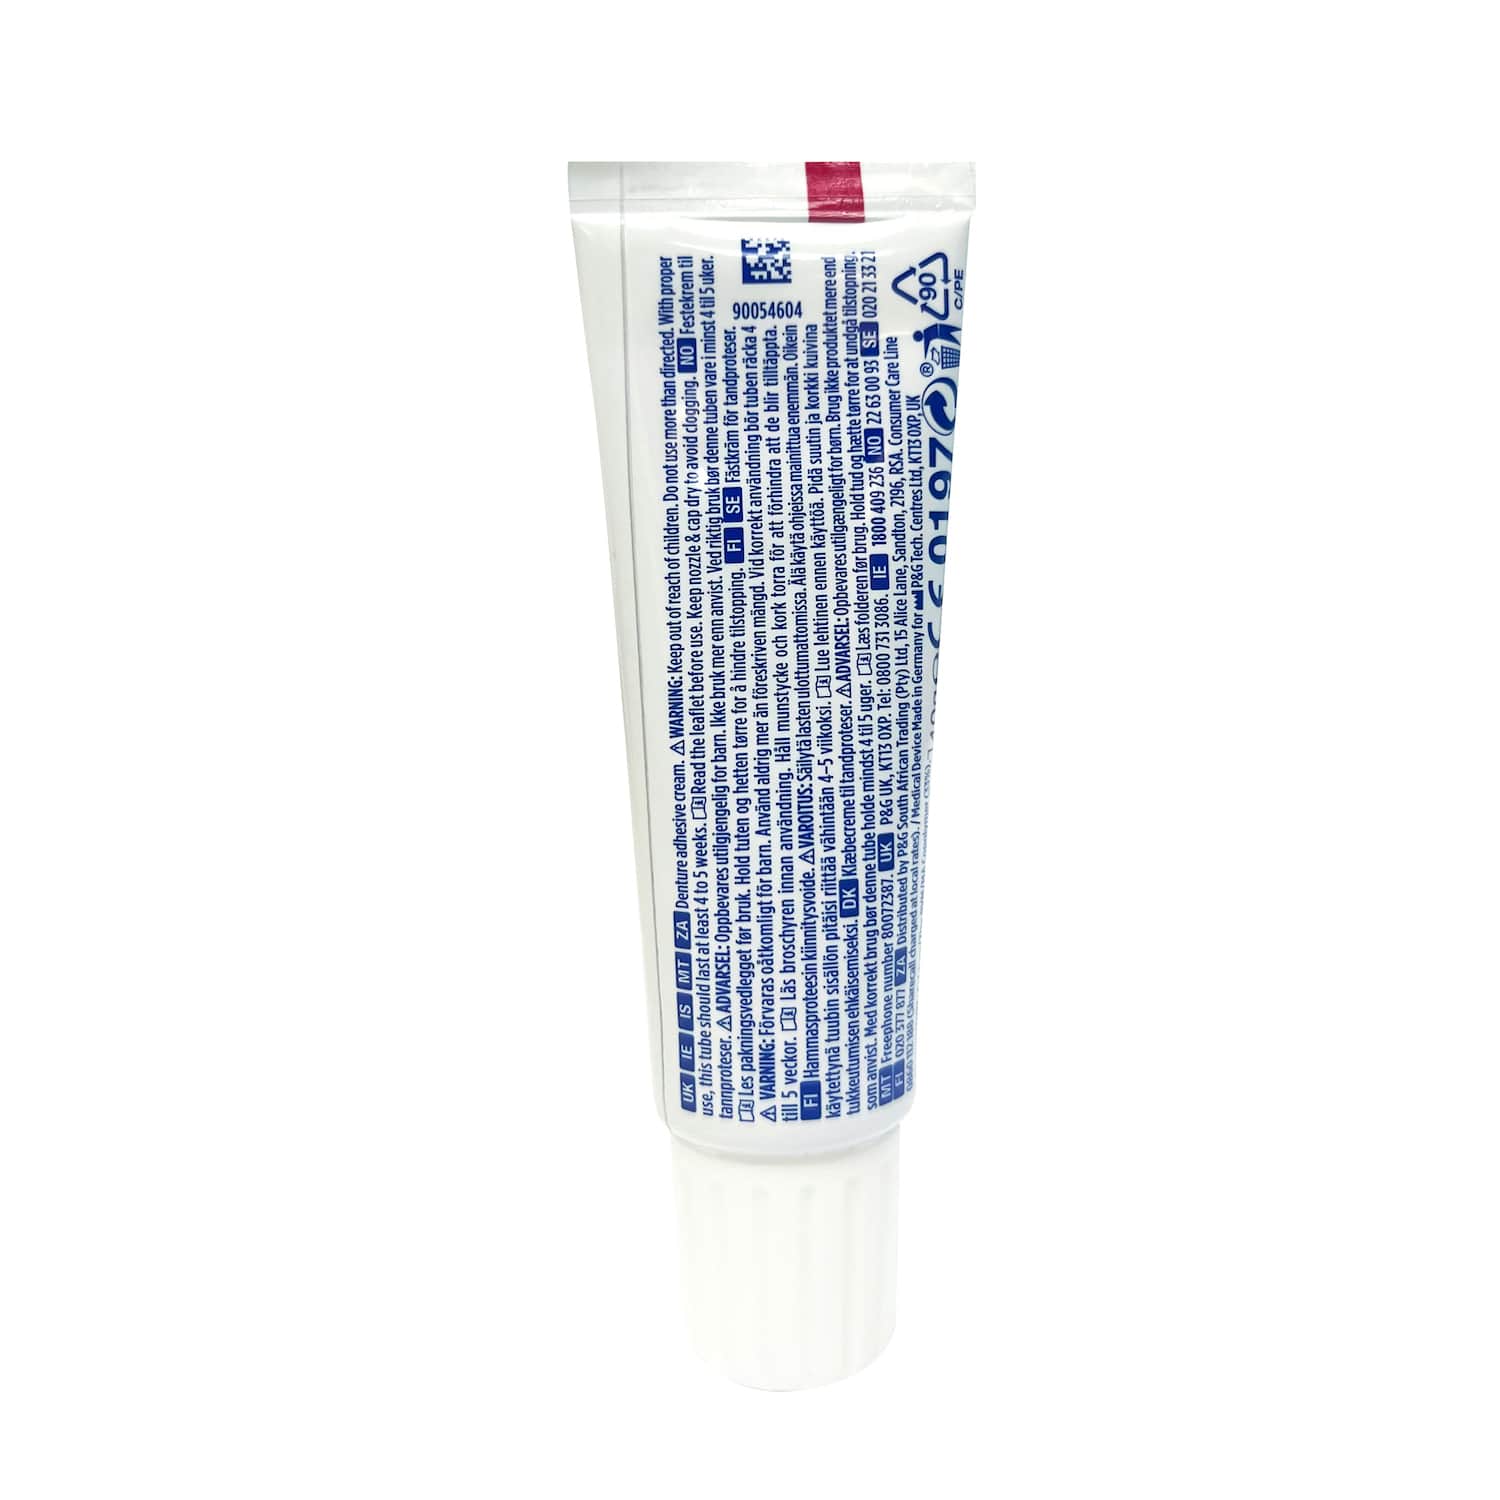 [P&G] Fixodent Dental Adhesive Cream 40g